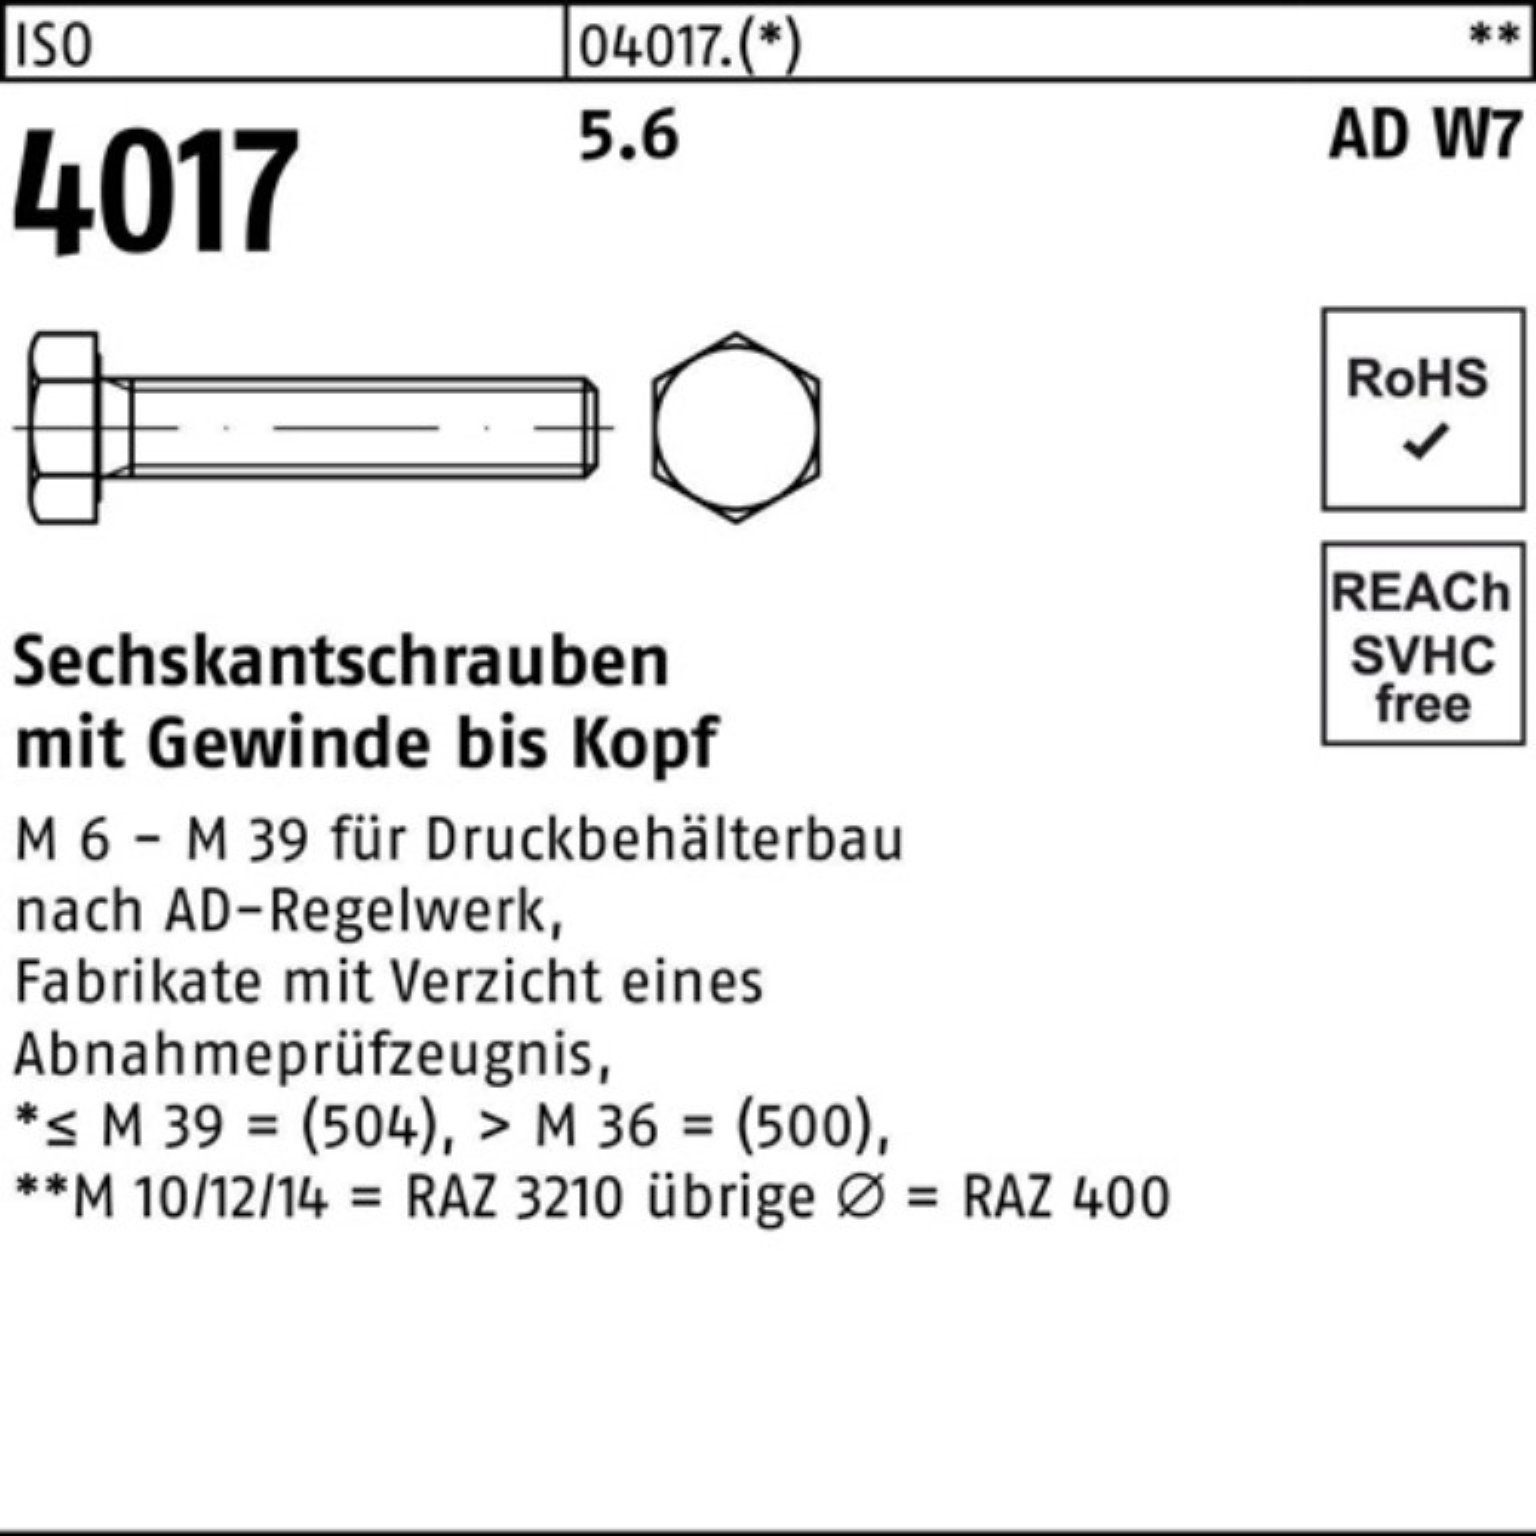 ISO Pack W7 AD M33x VG 4017 1 Sechskantschraube 90 IS Stück Sechskantschraube Bufab 5.6 100er